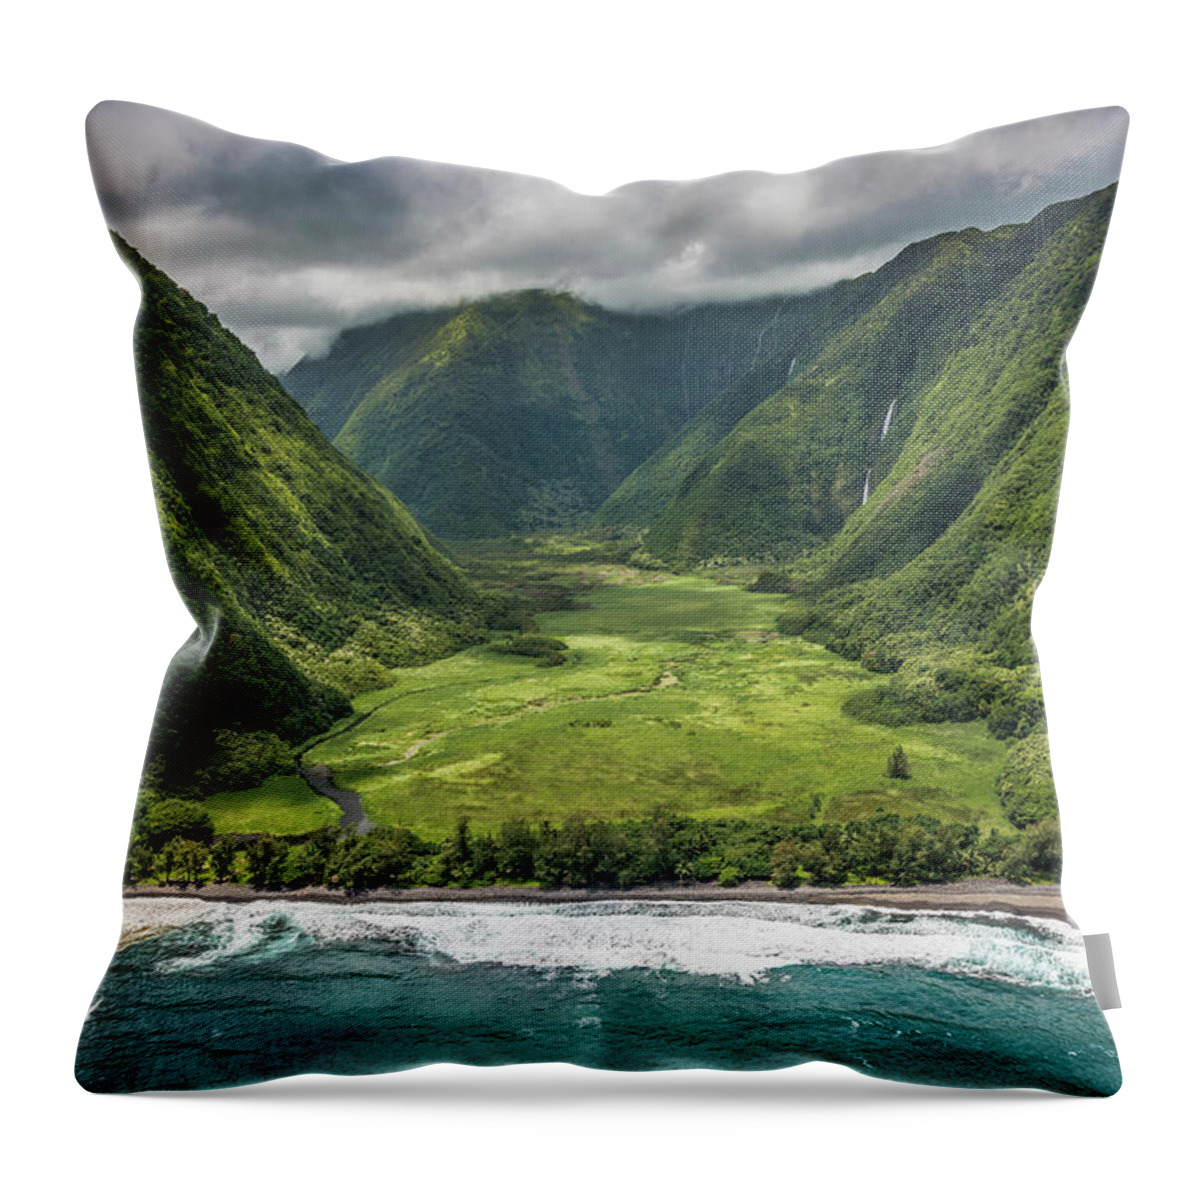 Maui Dream Mountains Throw Pillow featuring the photograph Maui Dream Mountains by Leonardo Dale